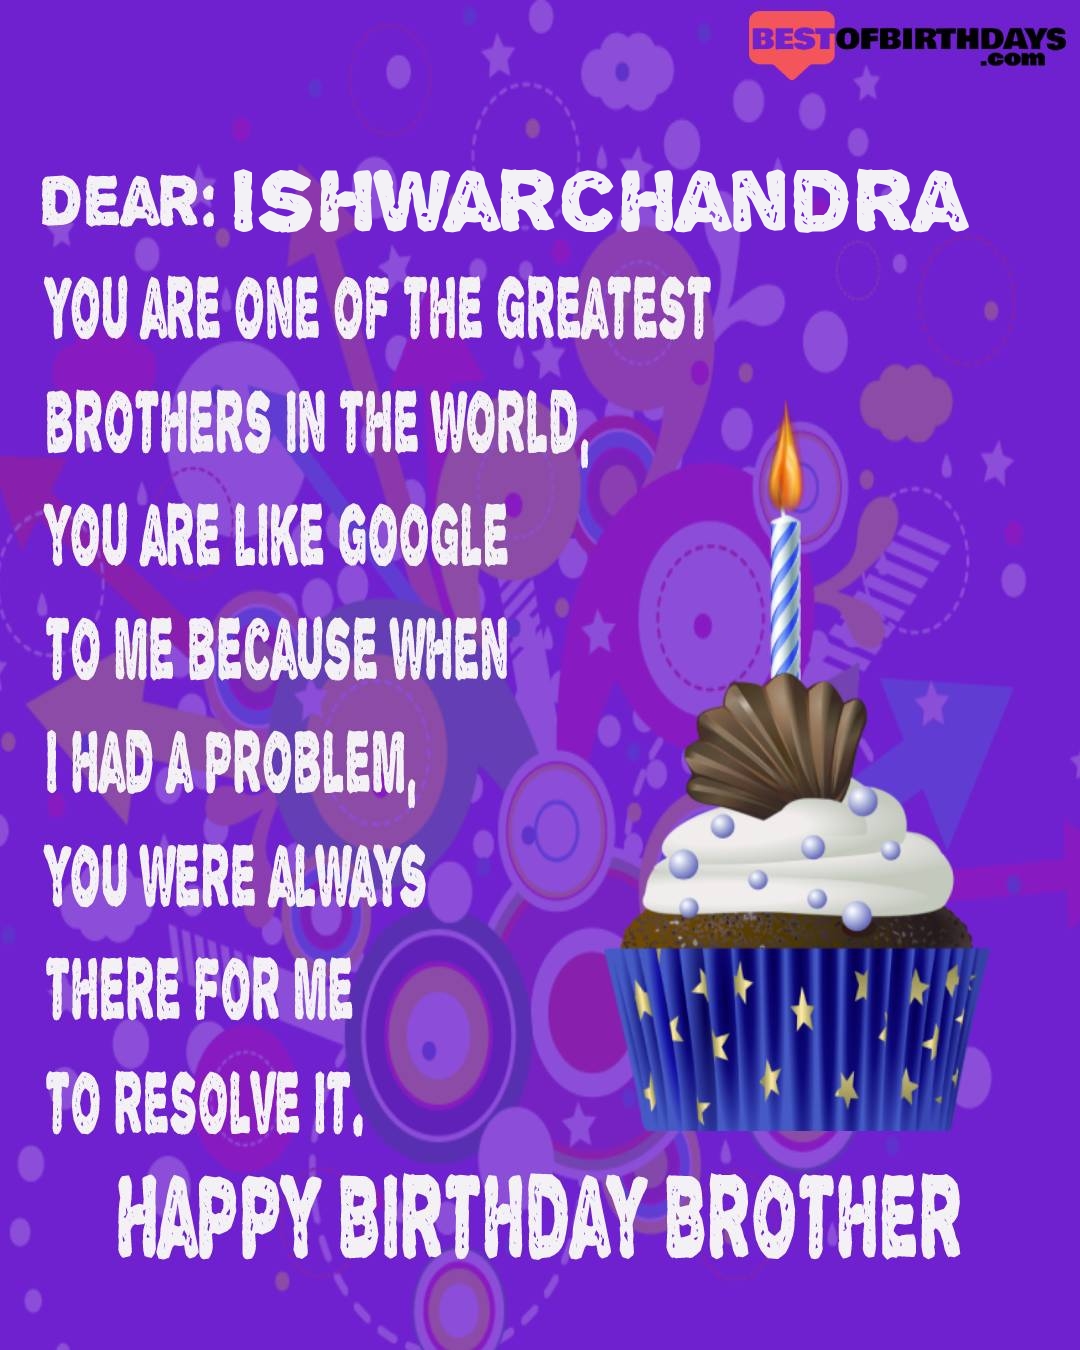 Happy birthday ishwarchandra bhai brother bro